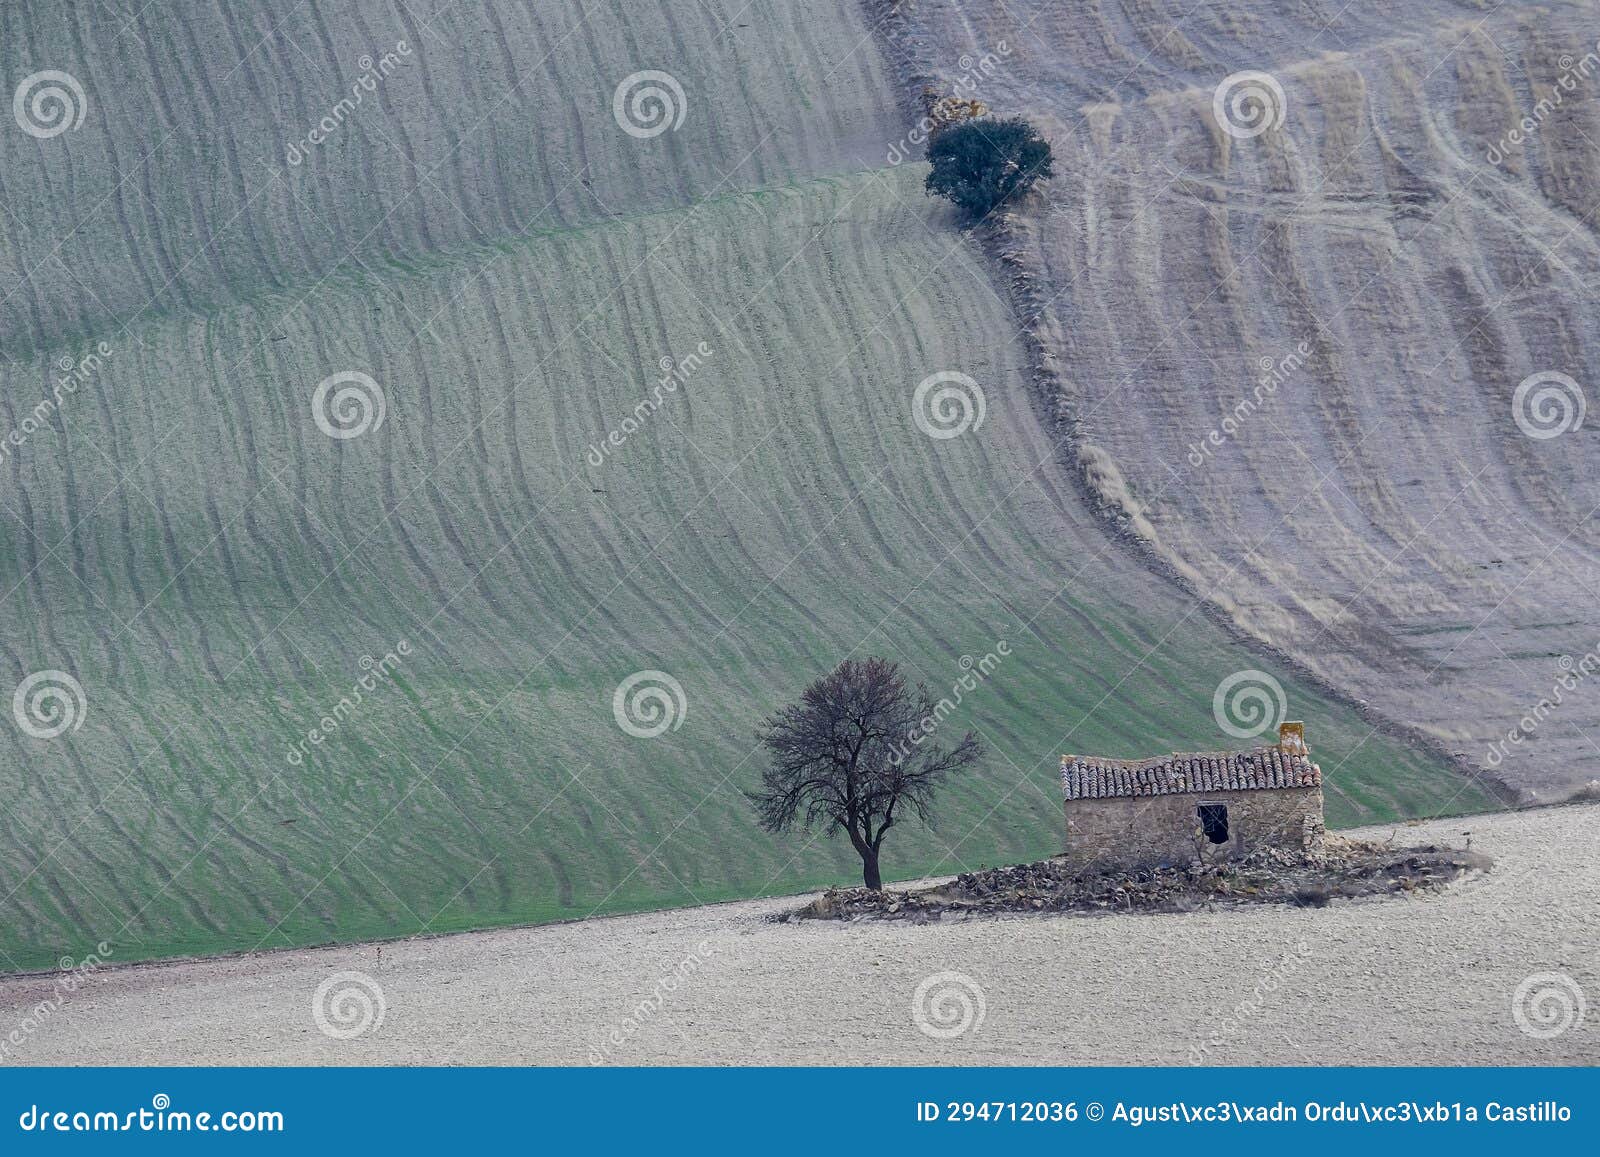 cerealistic landscape of the granada geopark.